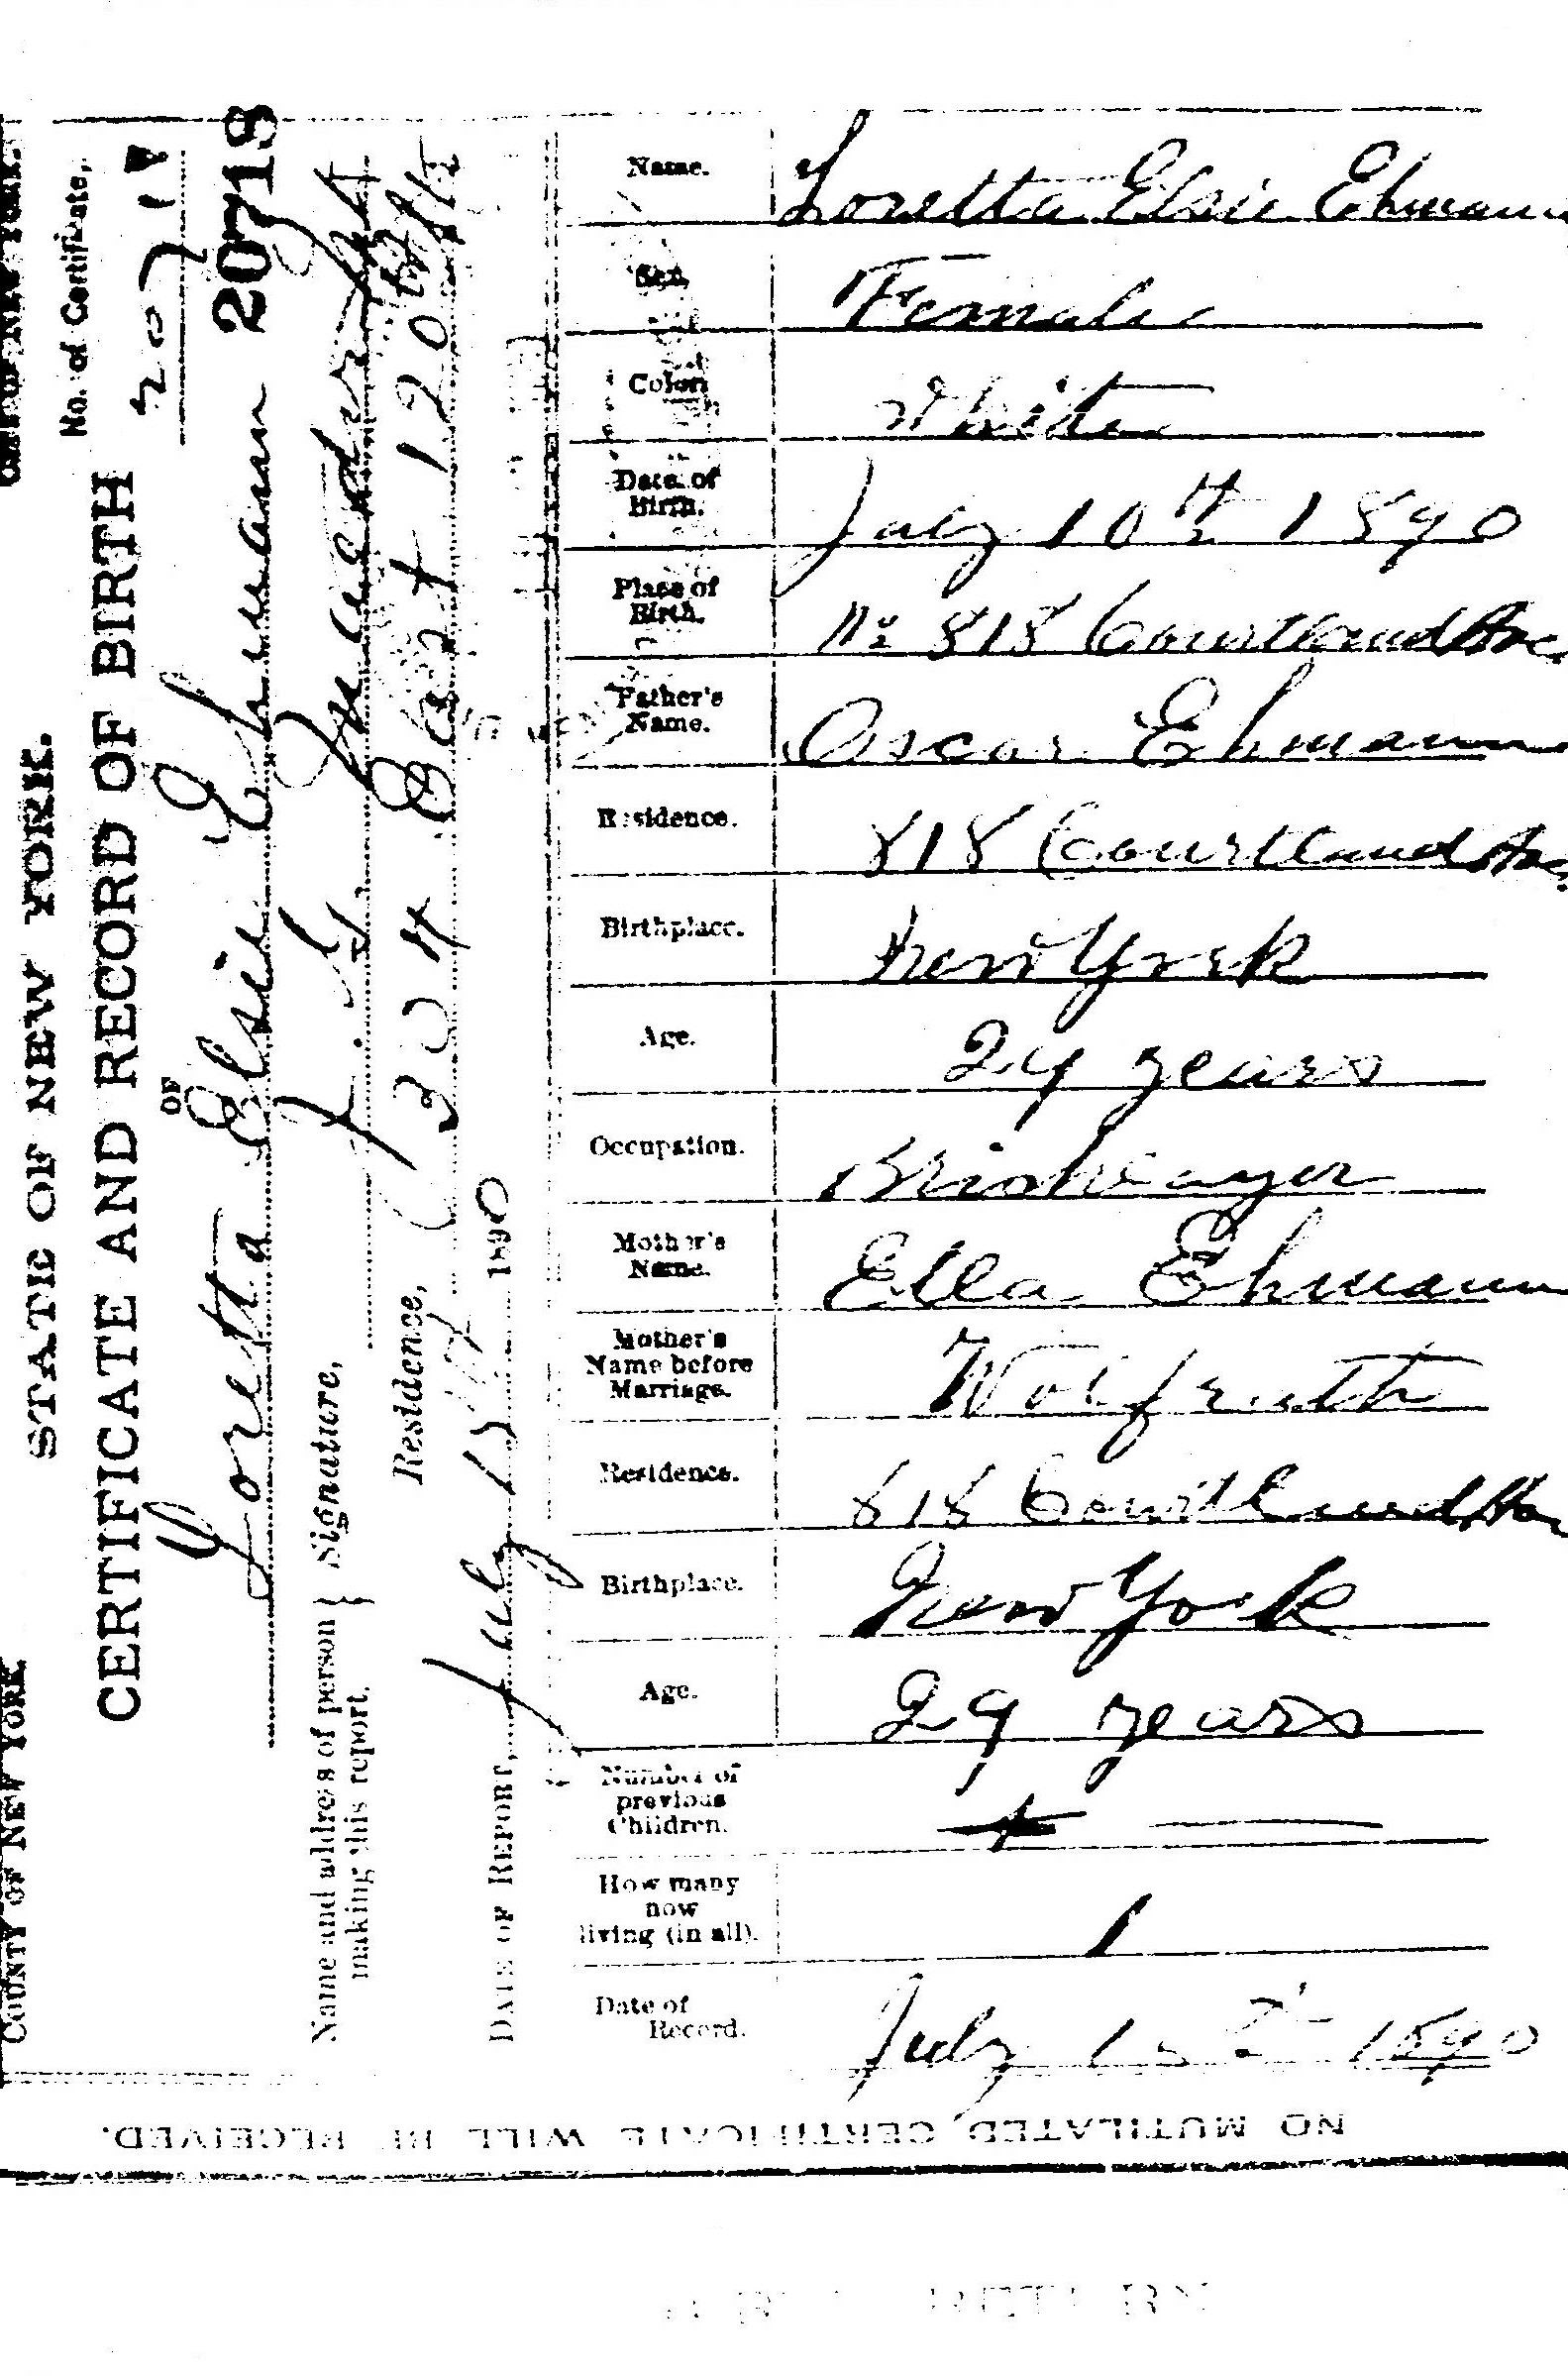 Birth certificate of Loretta Elsie Ehmann, 1890